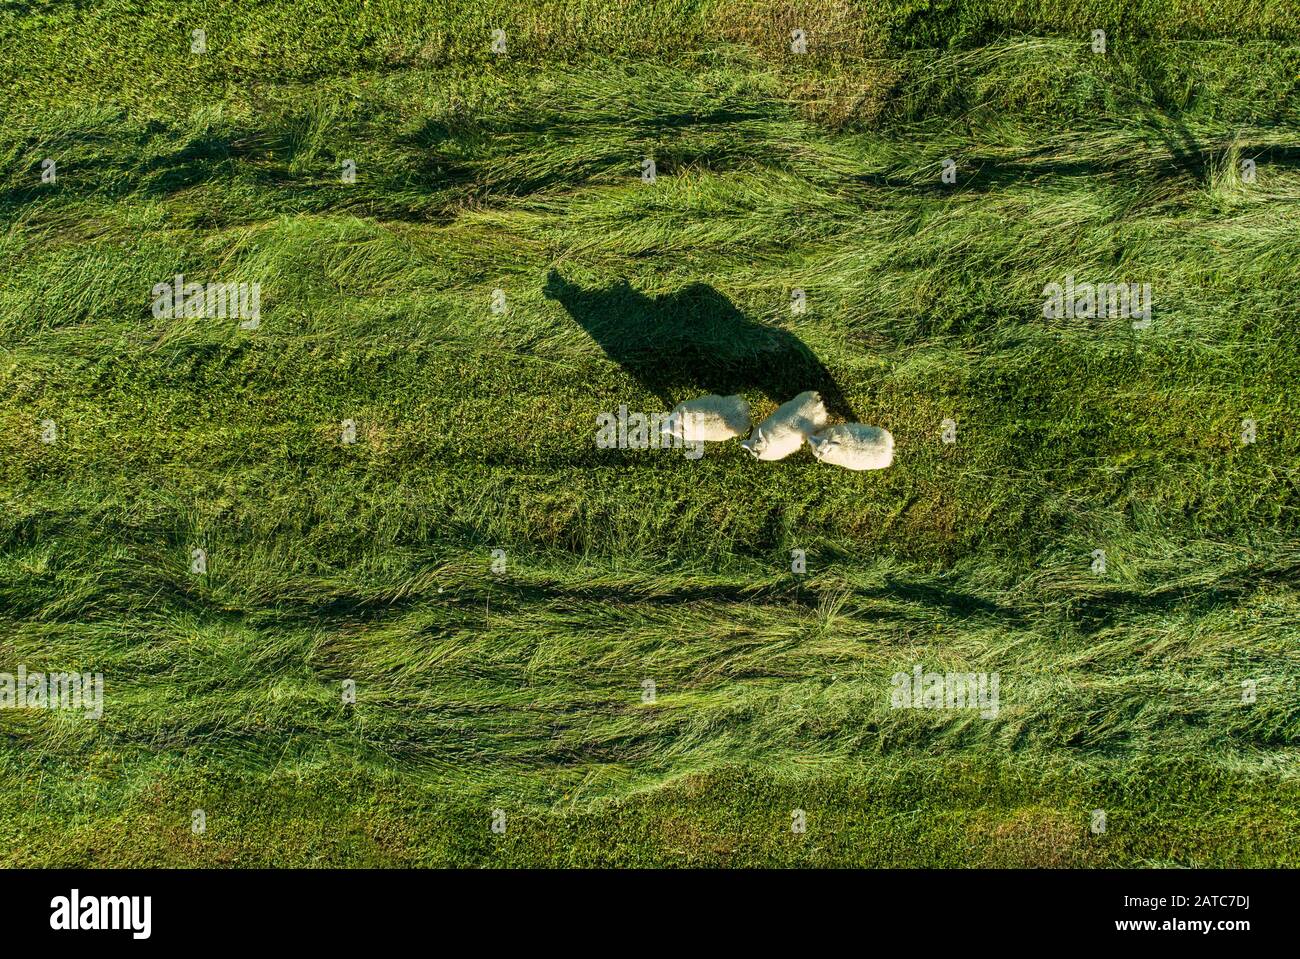 Sheep roaming a green grassy field Stock Photo